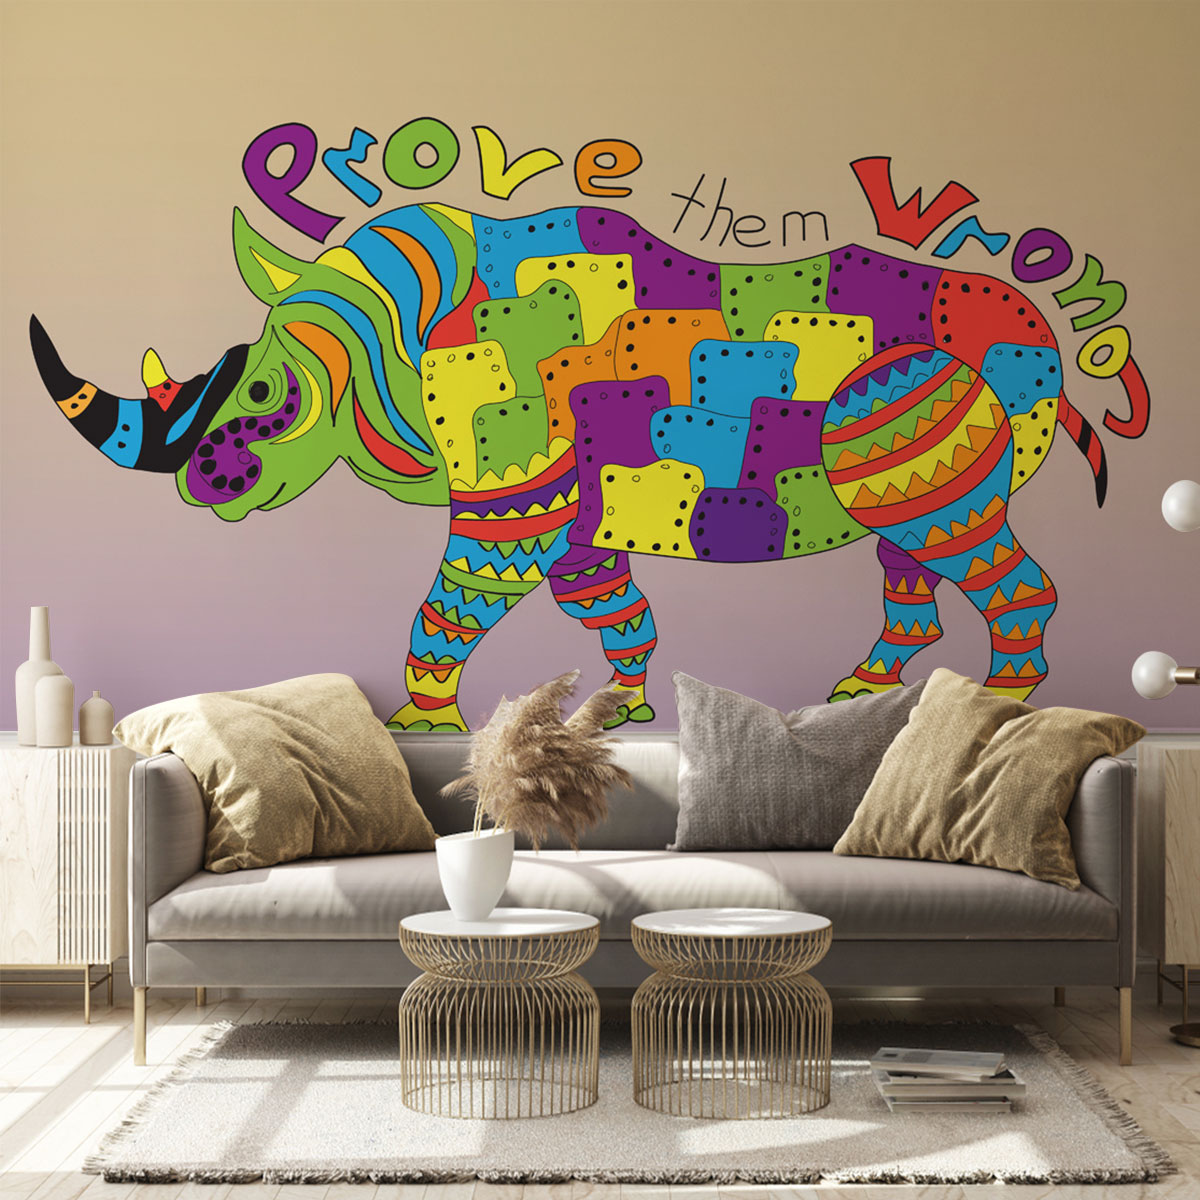 Rainbow Rhino Wall Mural